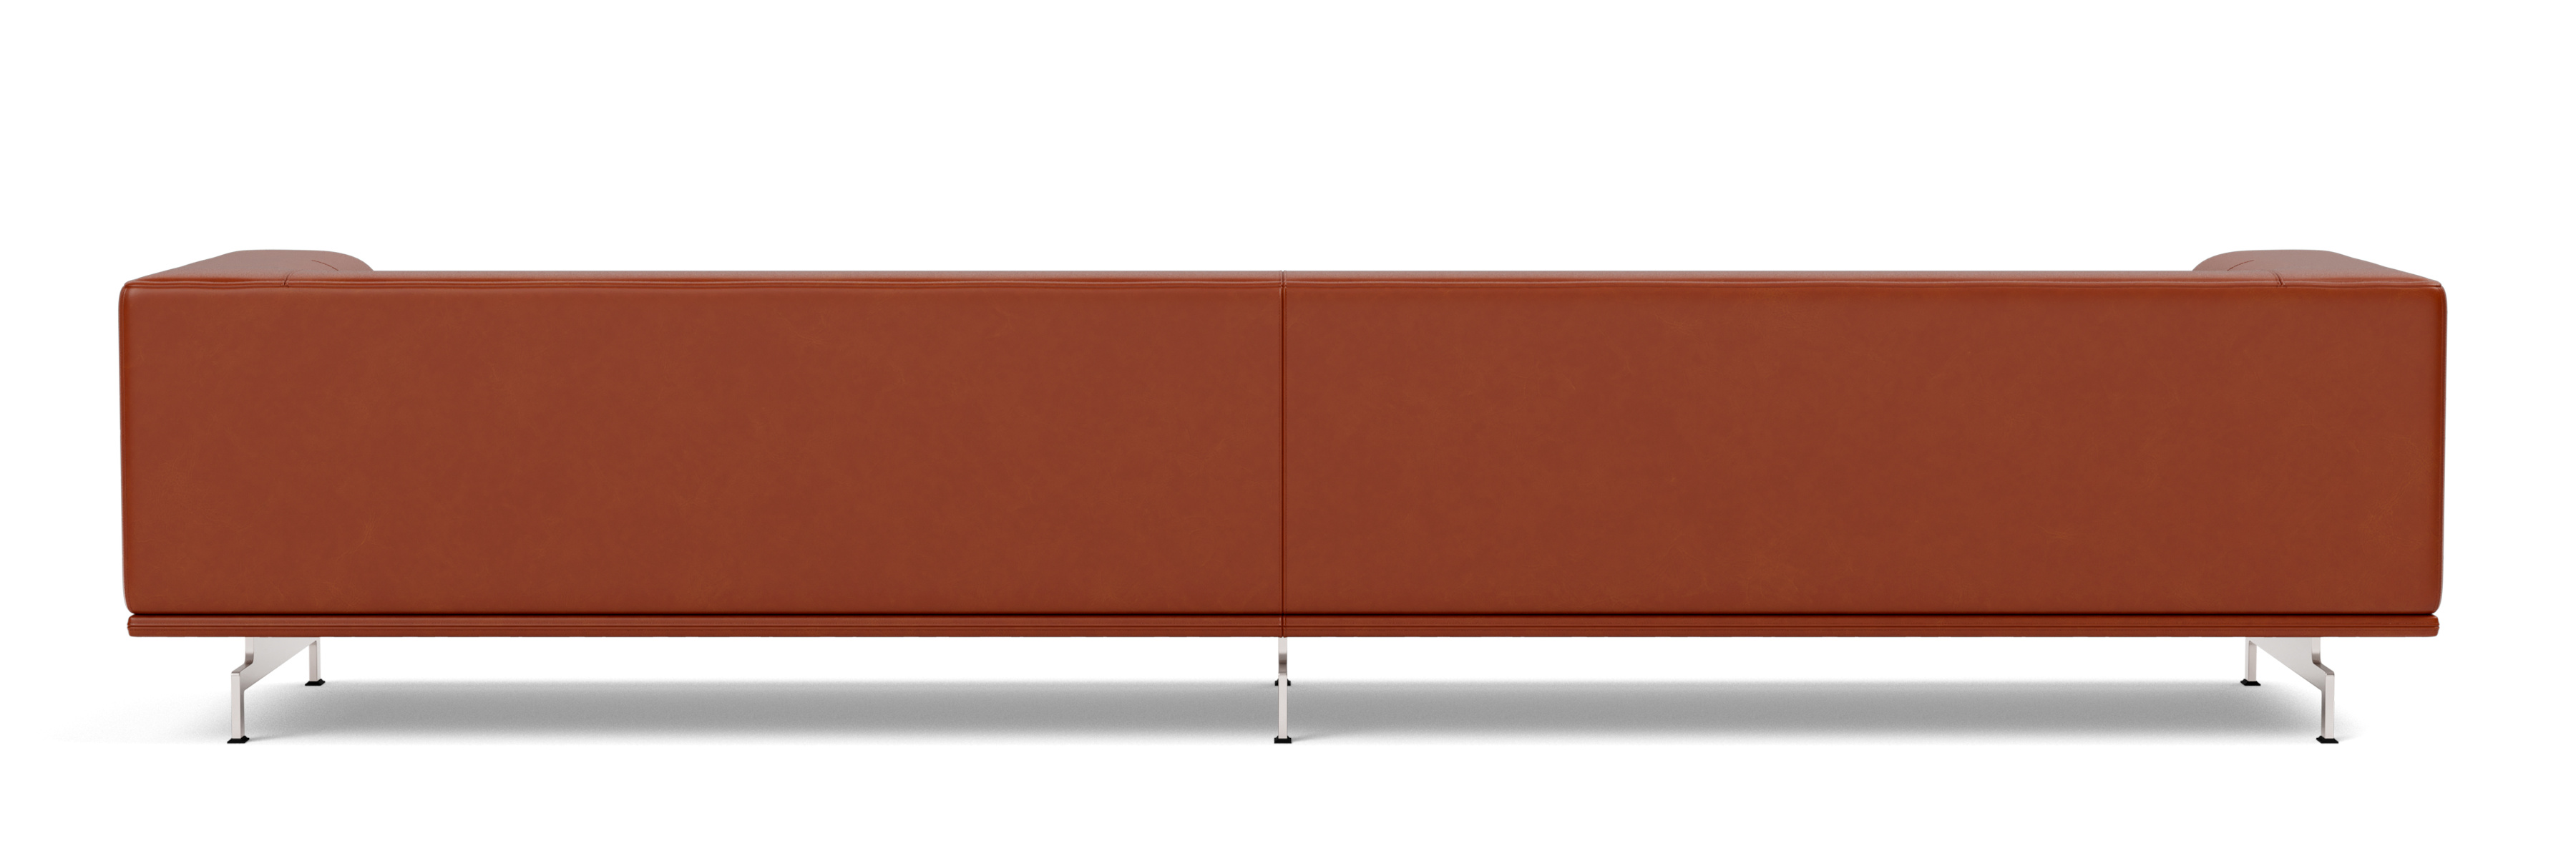 Delphi Sofa - Model 4512, brushed aluminium / leder max 98 schwarz